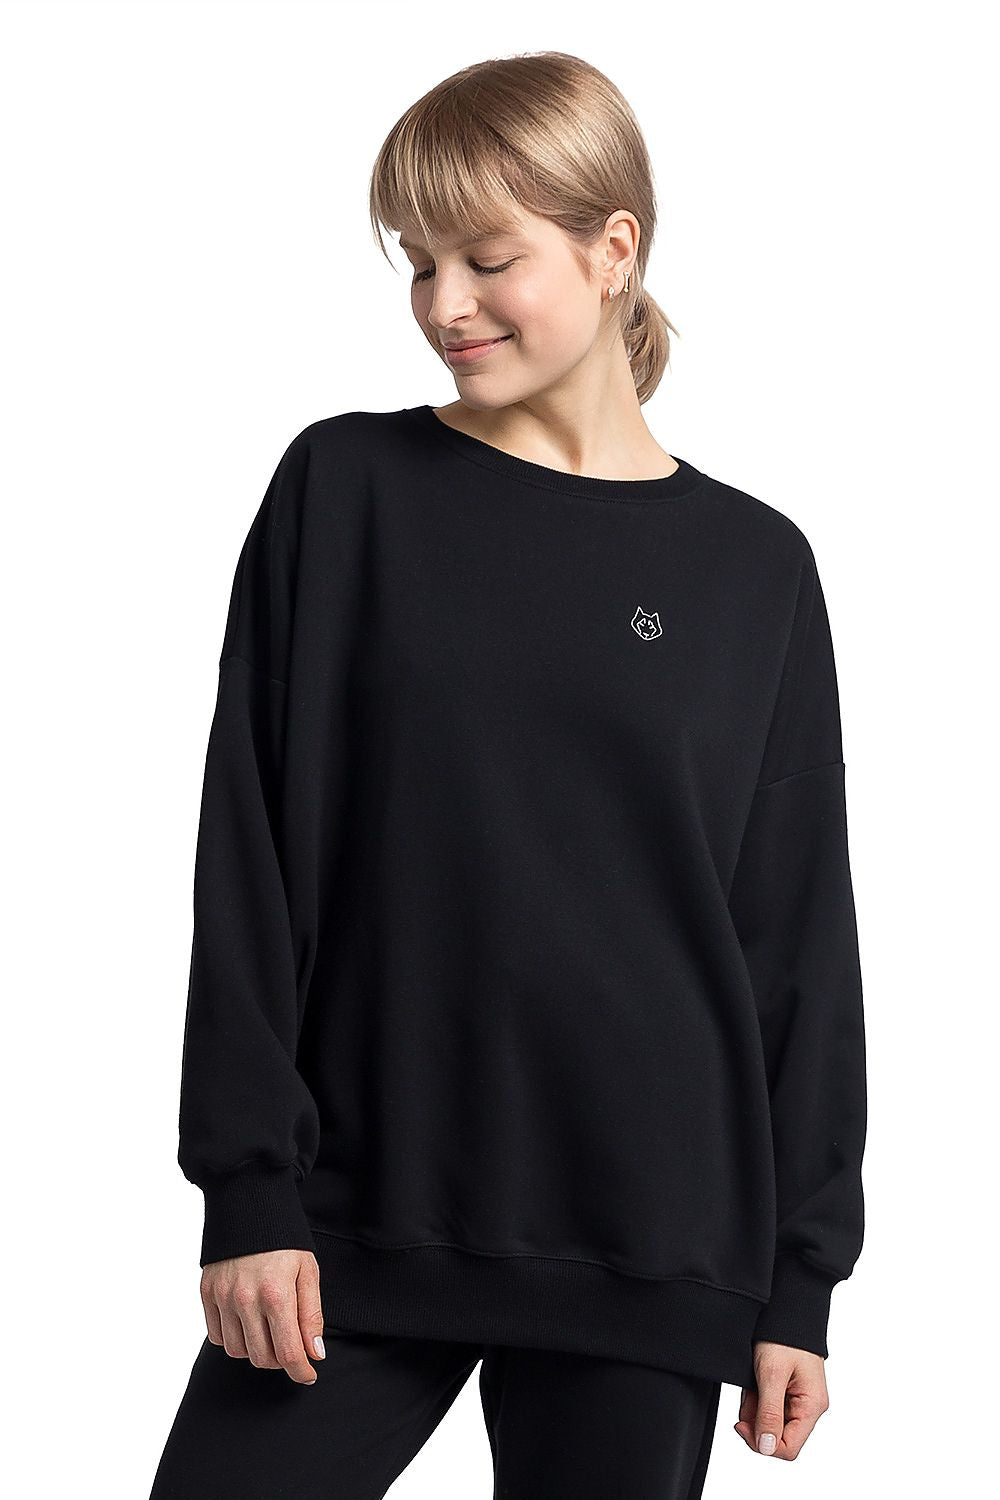 LaLupa Oversized Sweatshirt Black